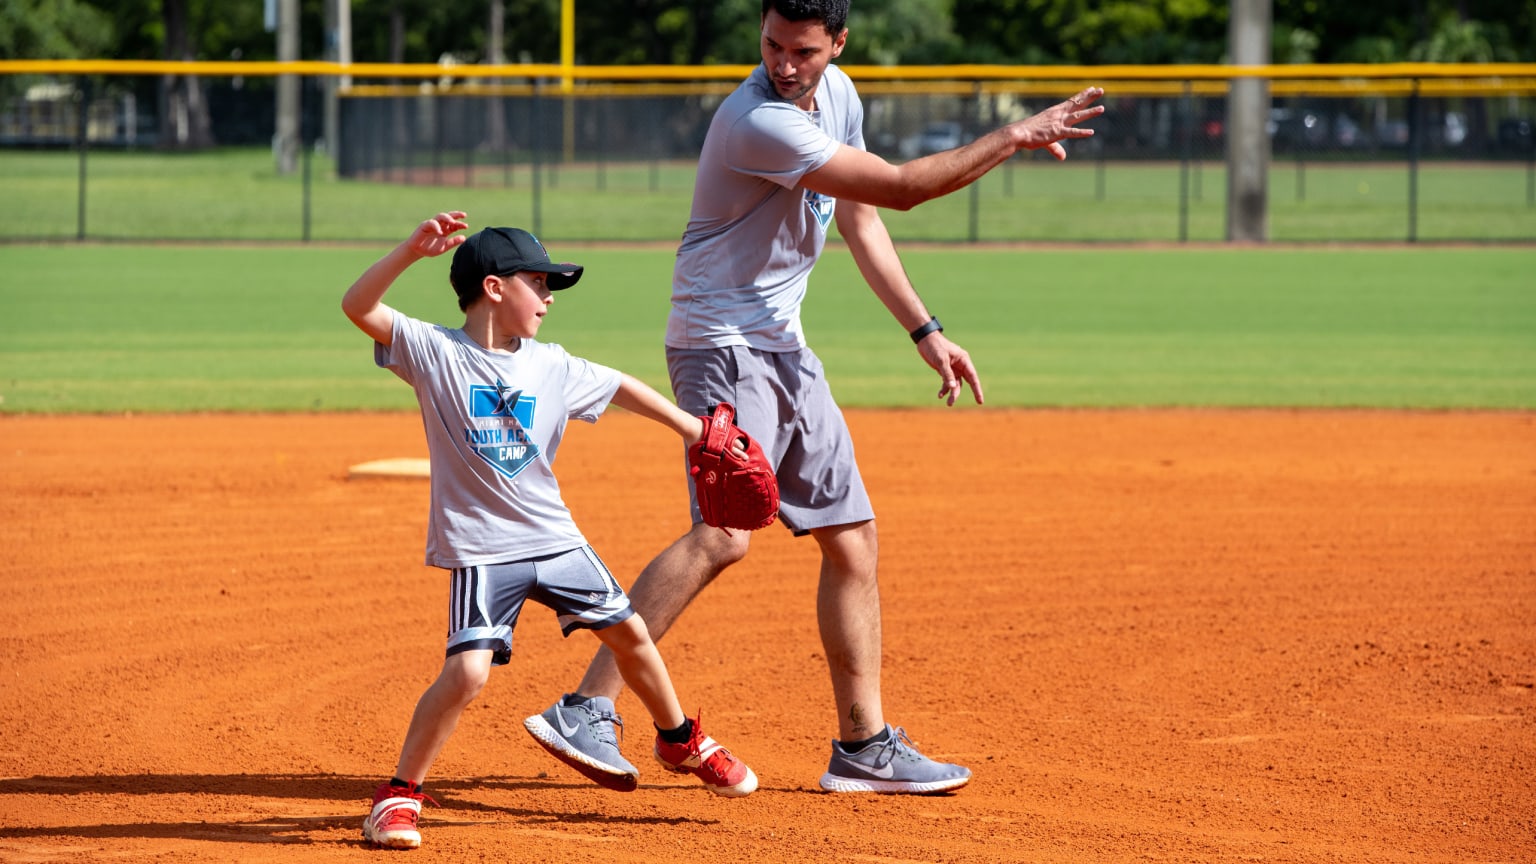 Miami Marlins - Youth Baseball and Softball